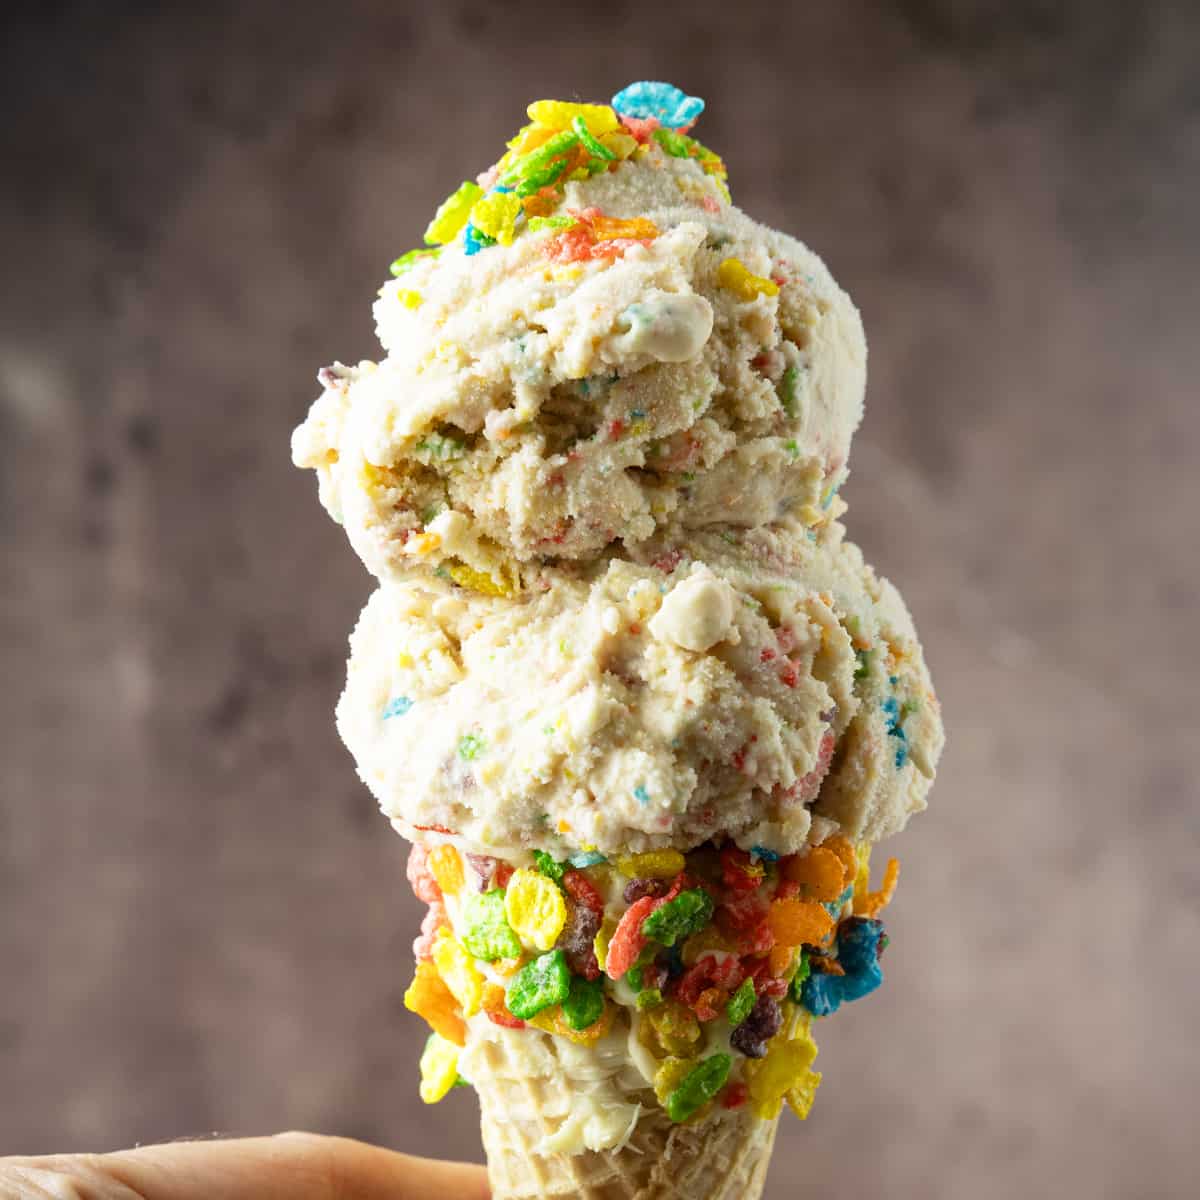 10 Terrific Twists on Homemade Ice Cream